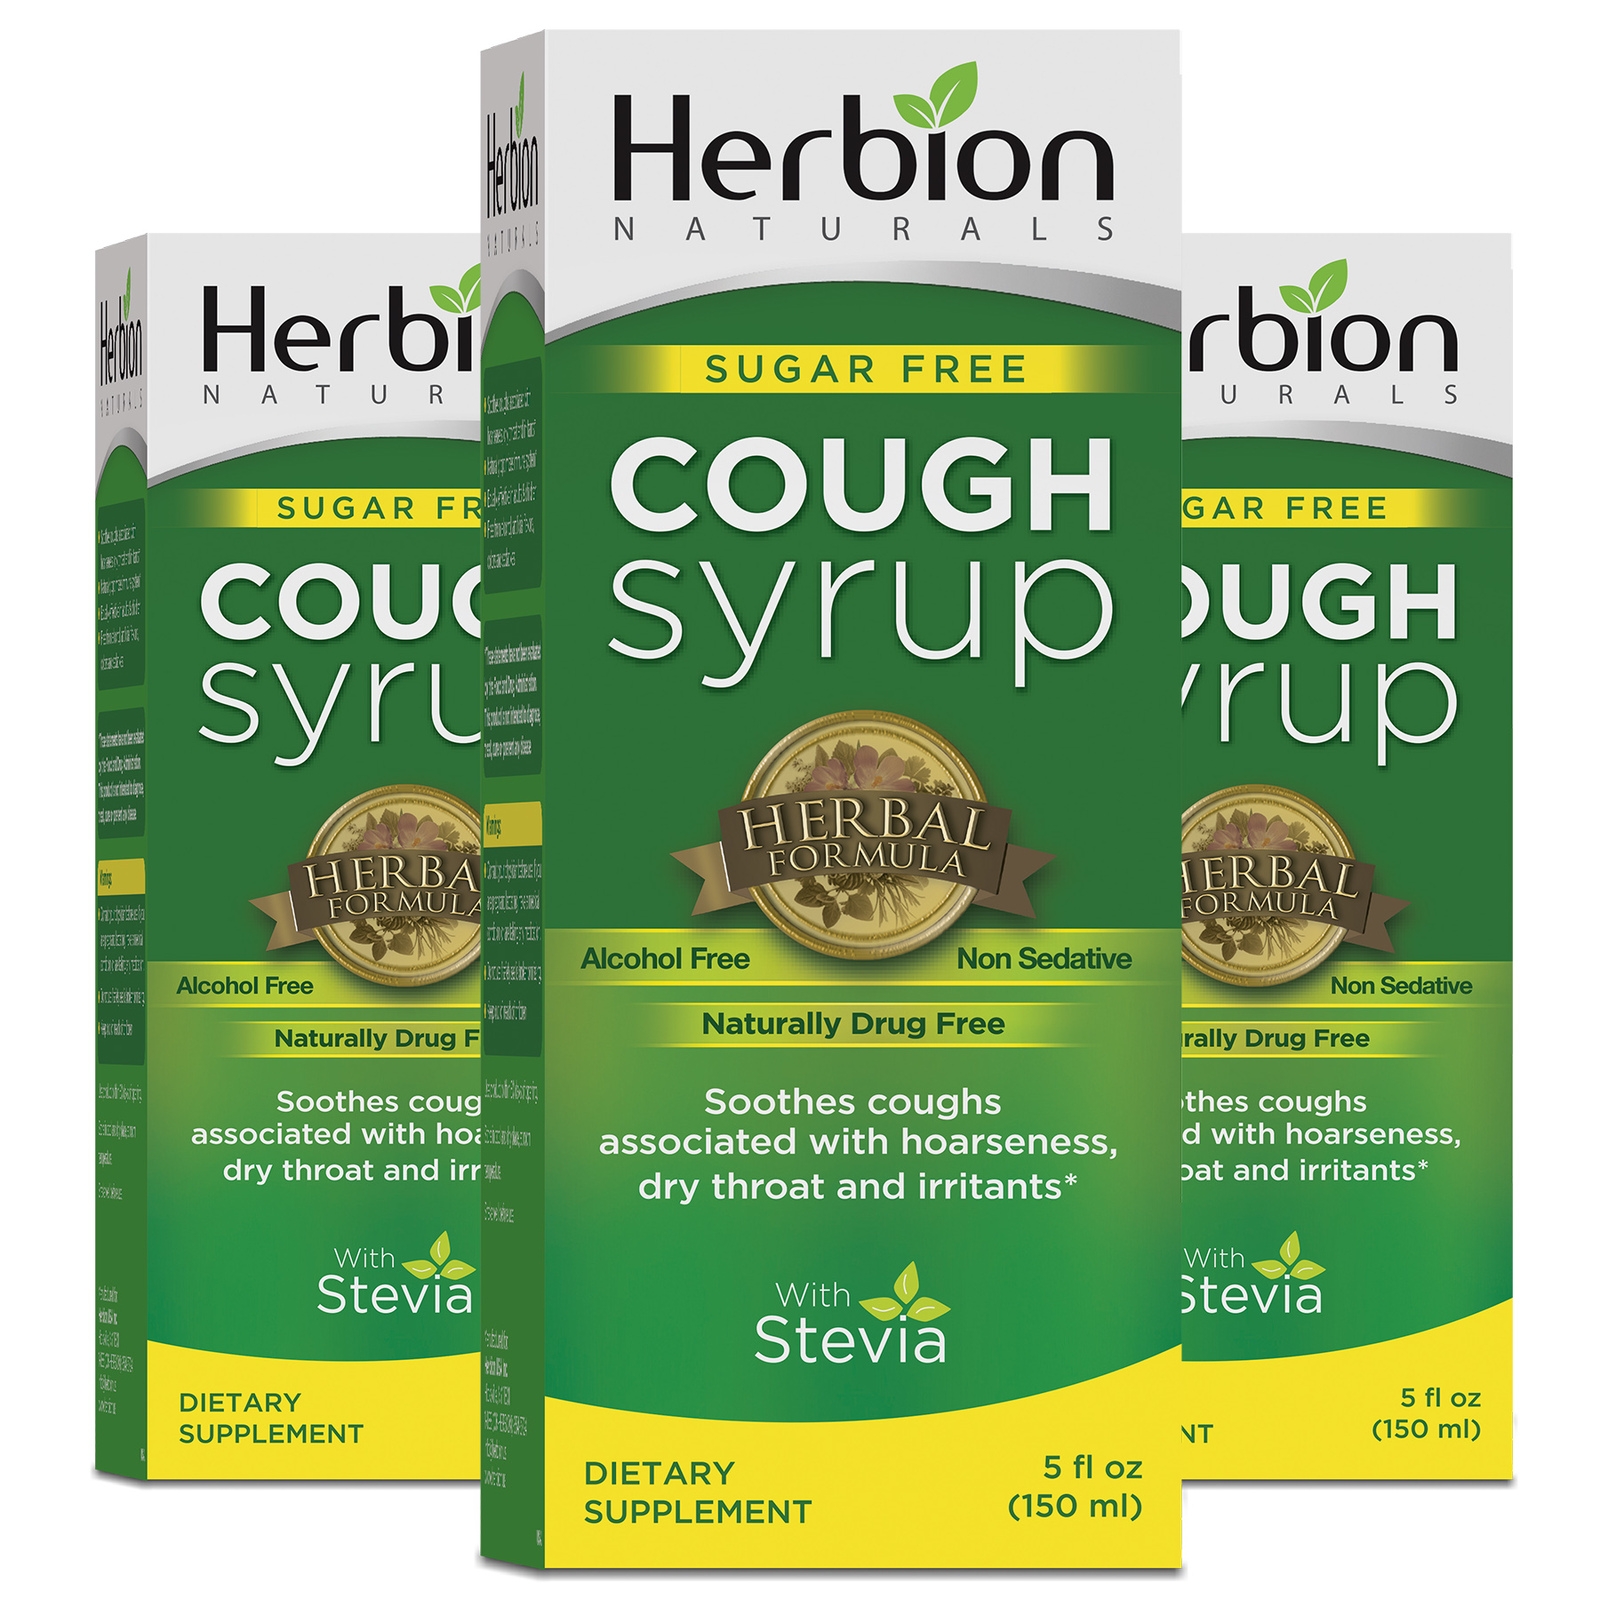 Herbion Naturals Cough Syrup Sugar-Free 5 fl oz